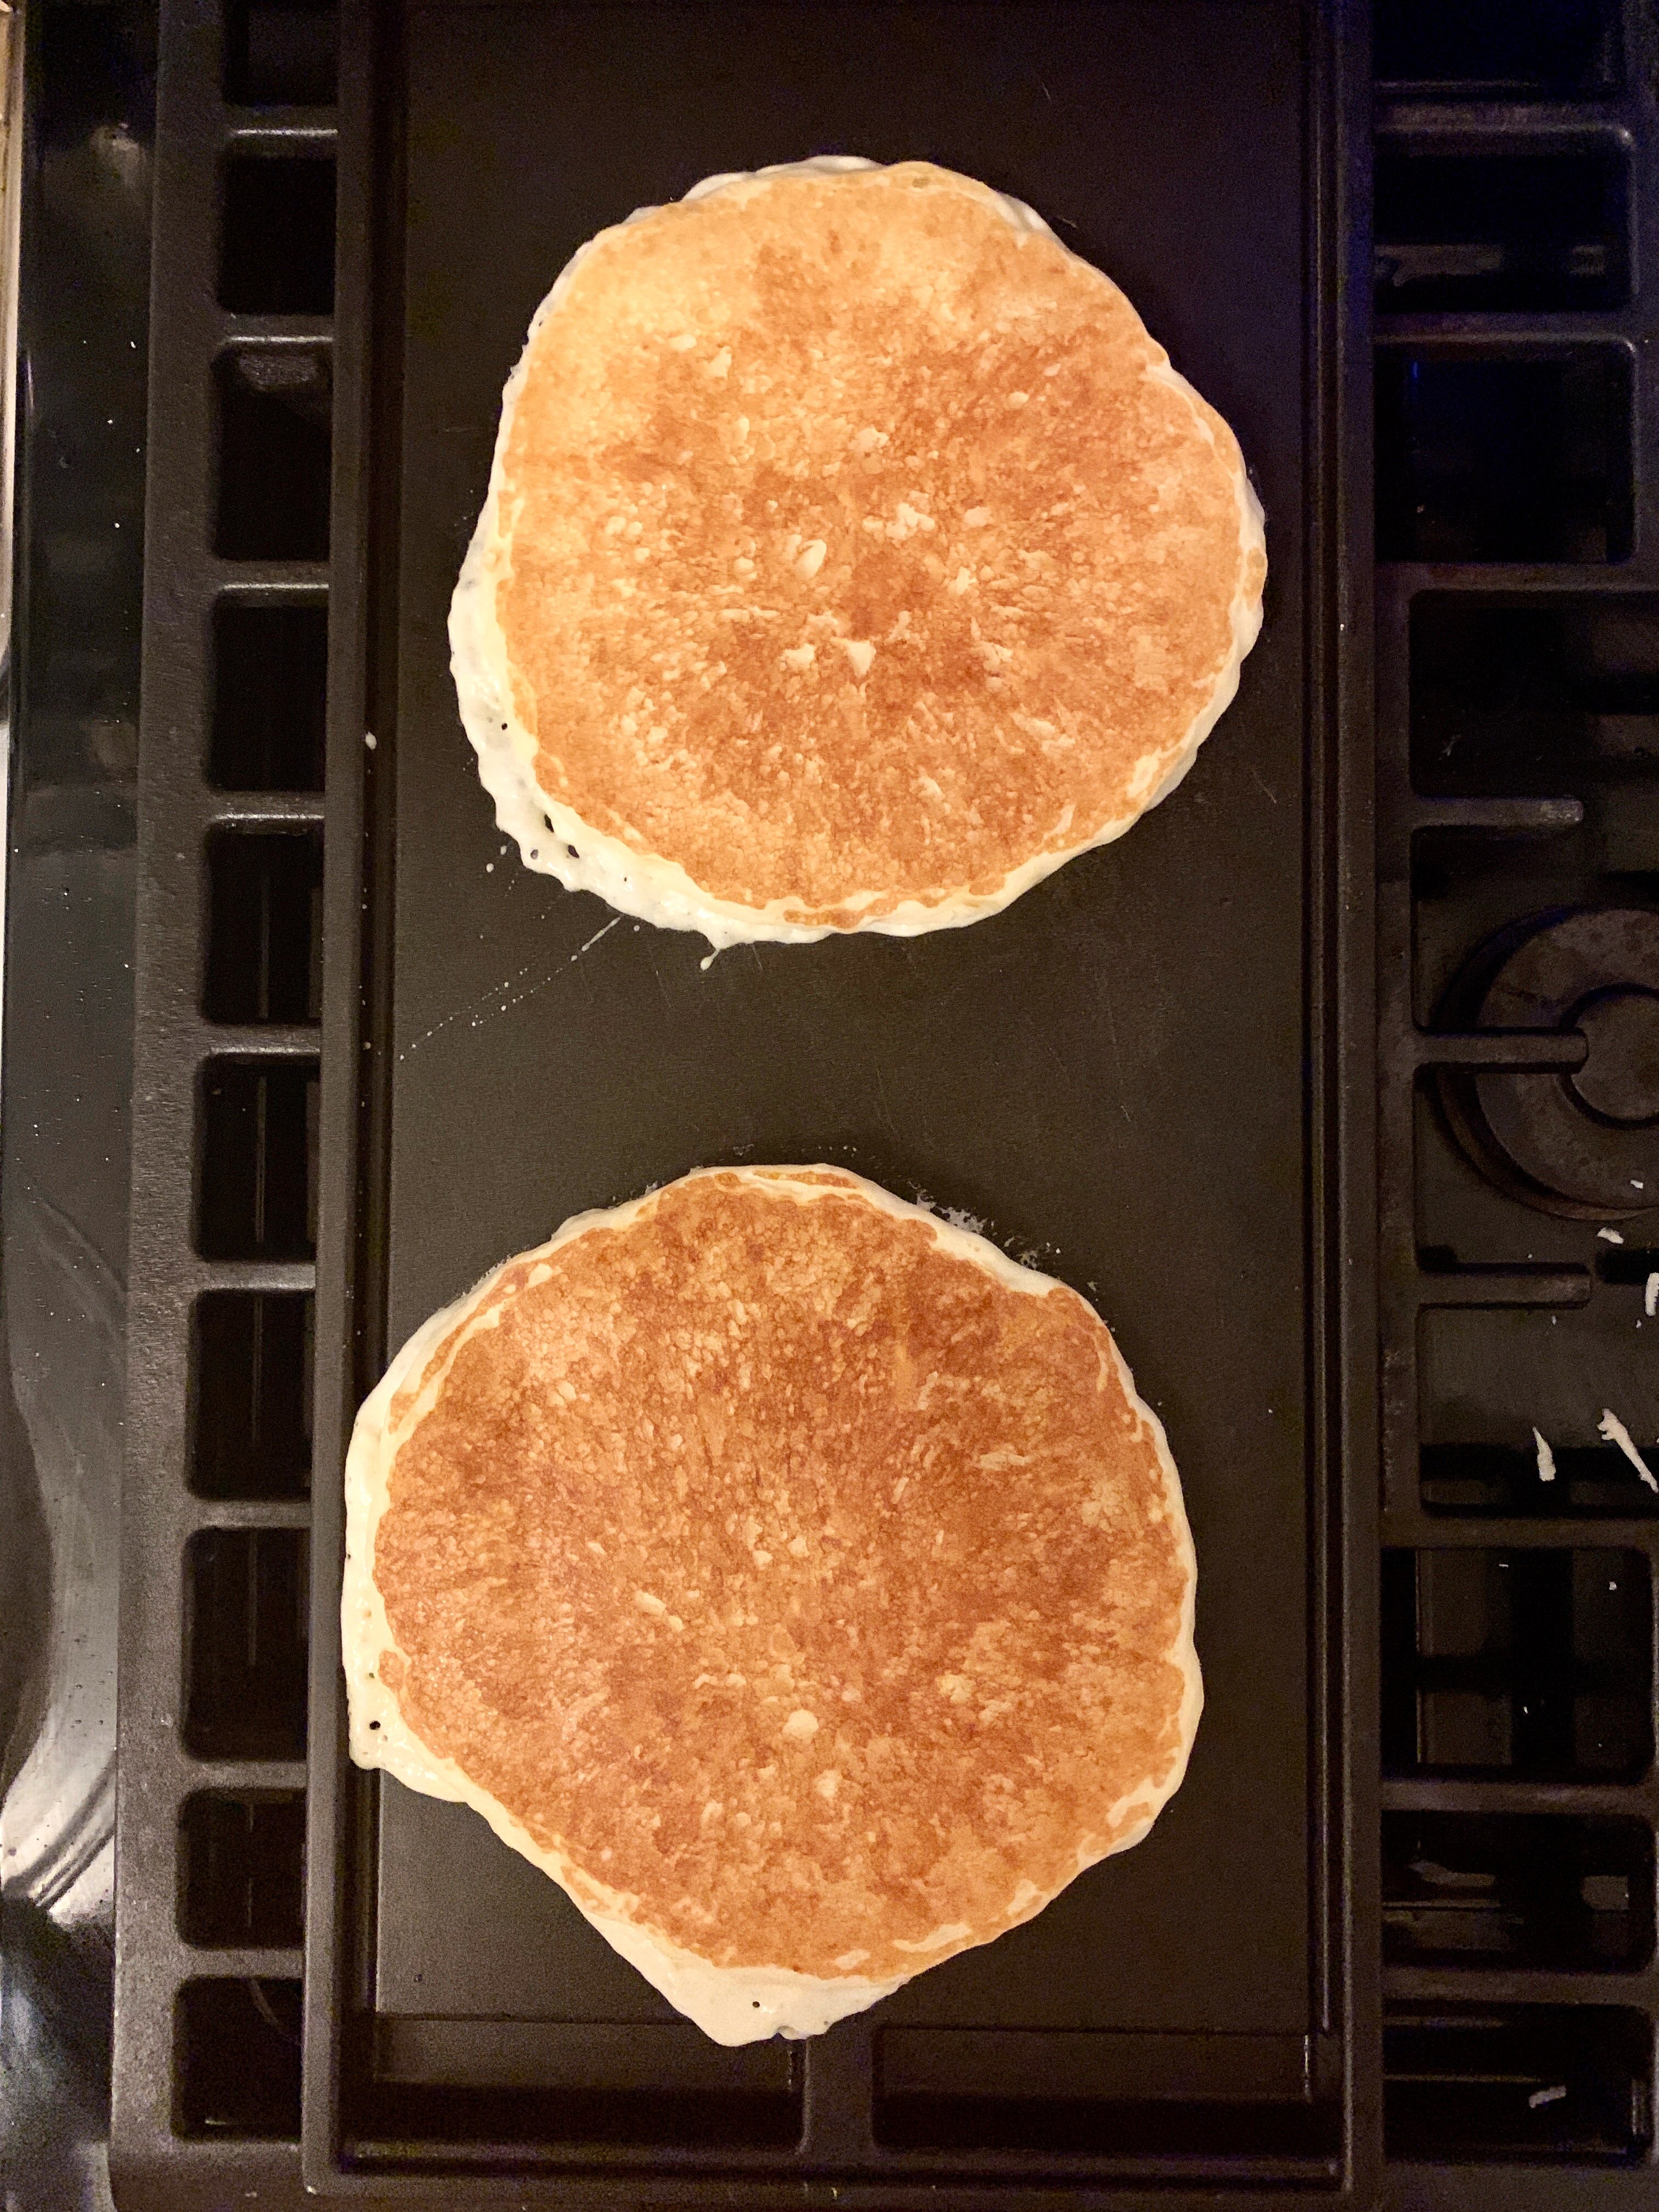 Can This Kitchen Gadget Make Perfect Pancakes?